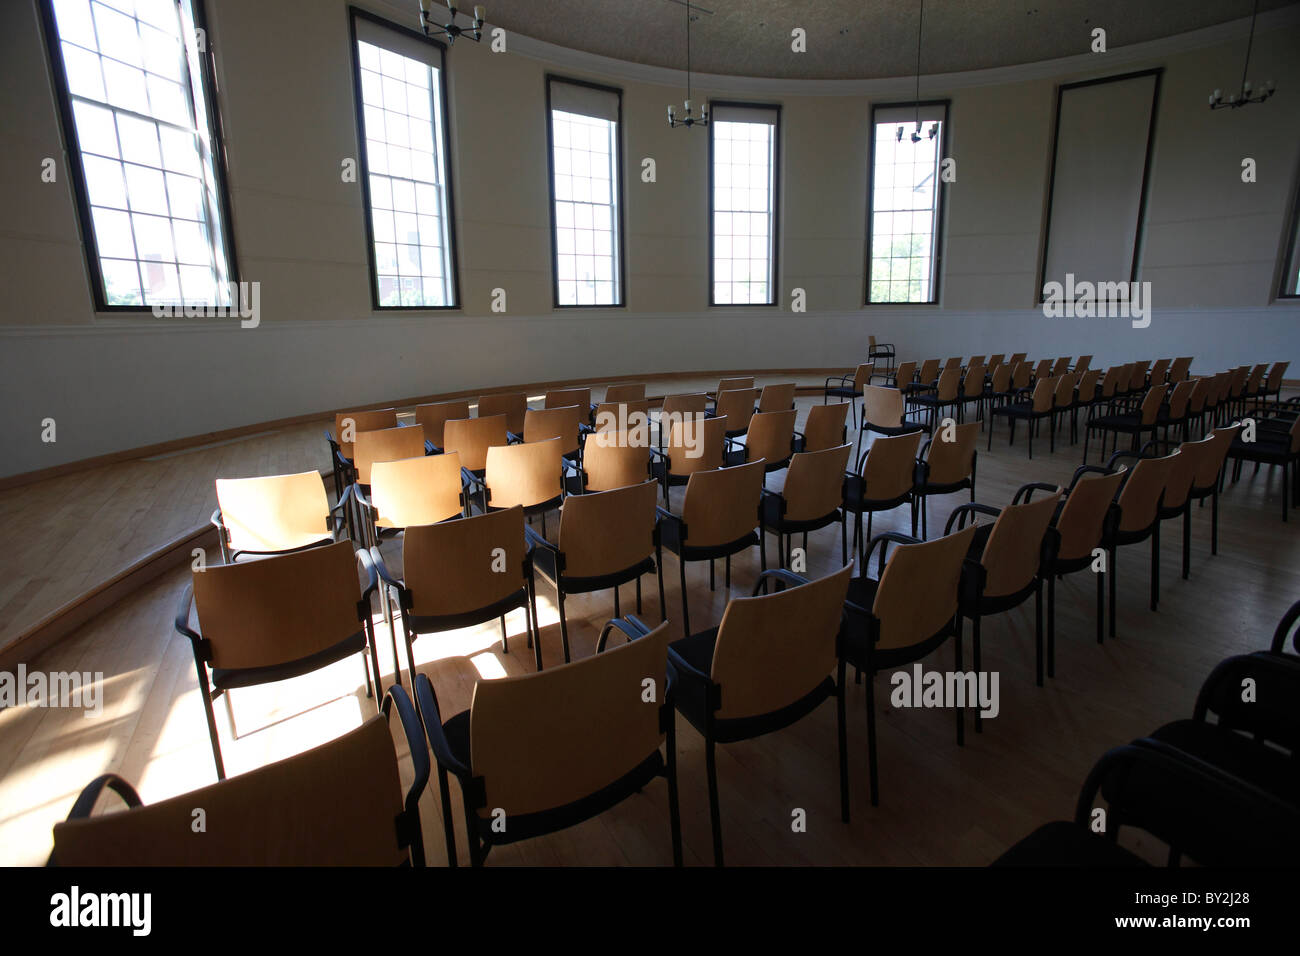 Empty seats in an auditorium Stock Photo